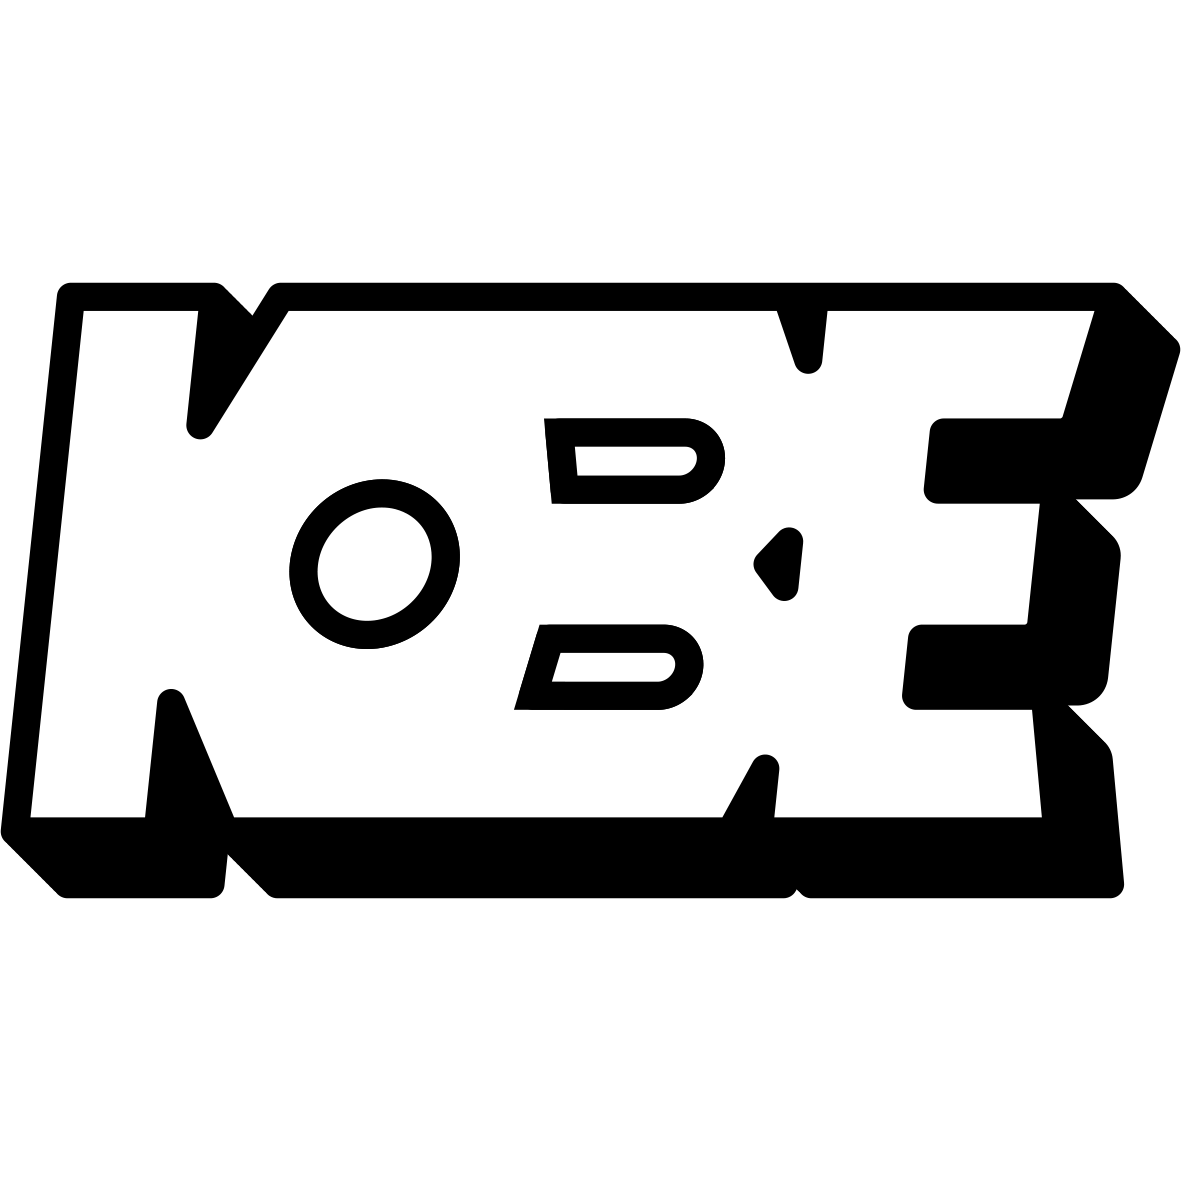 This is Kobe